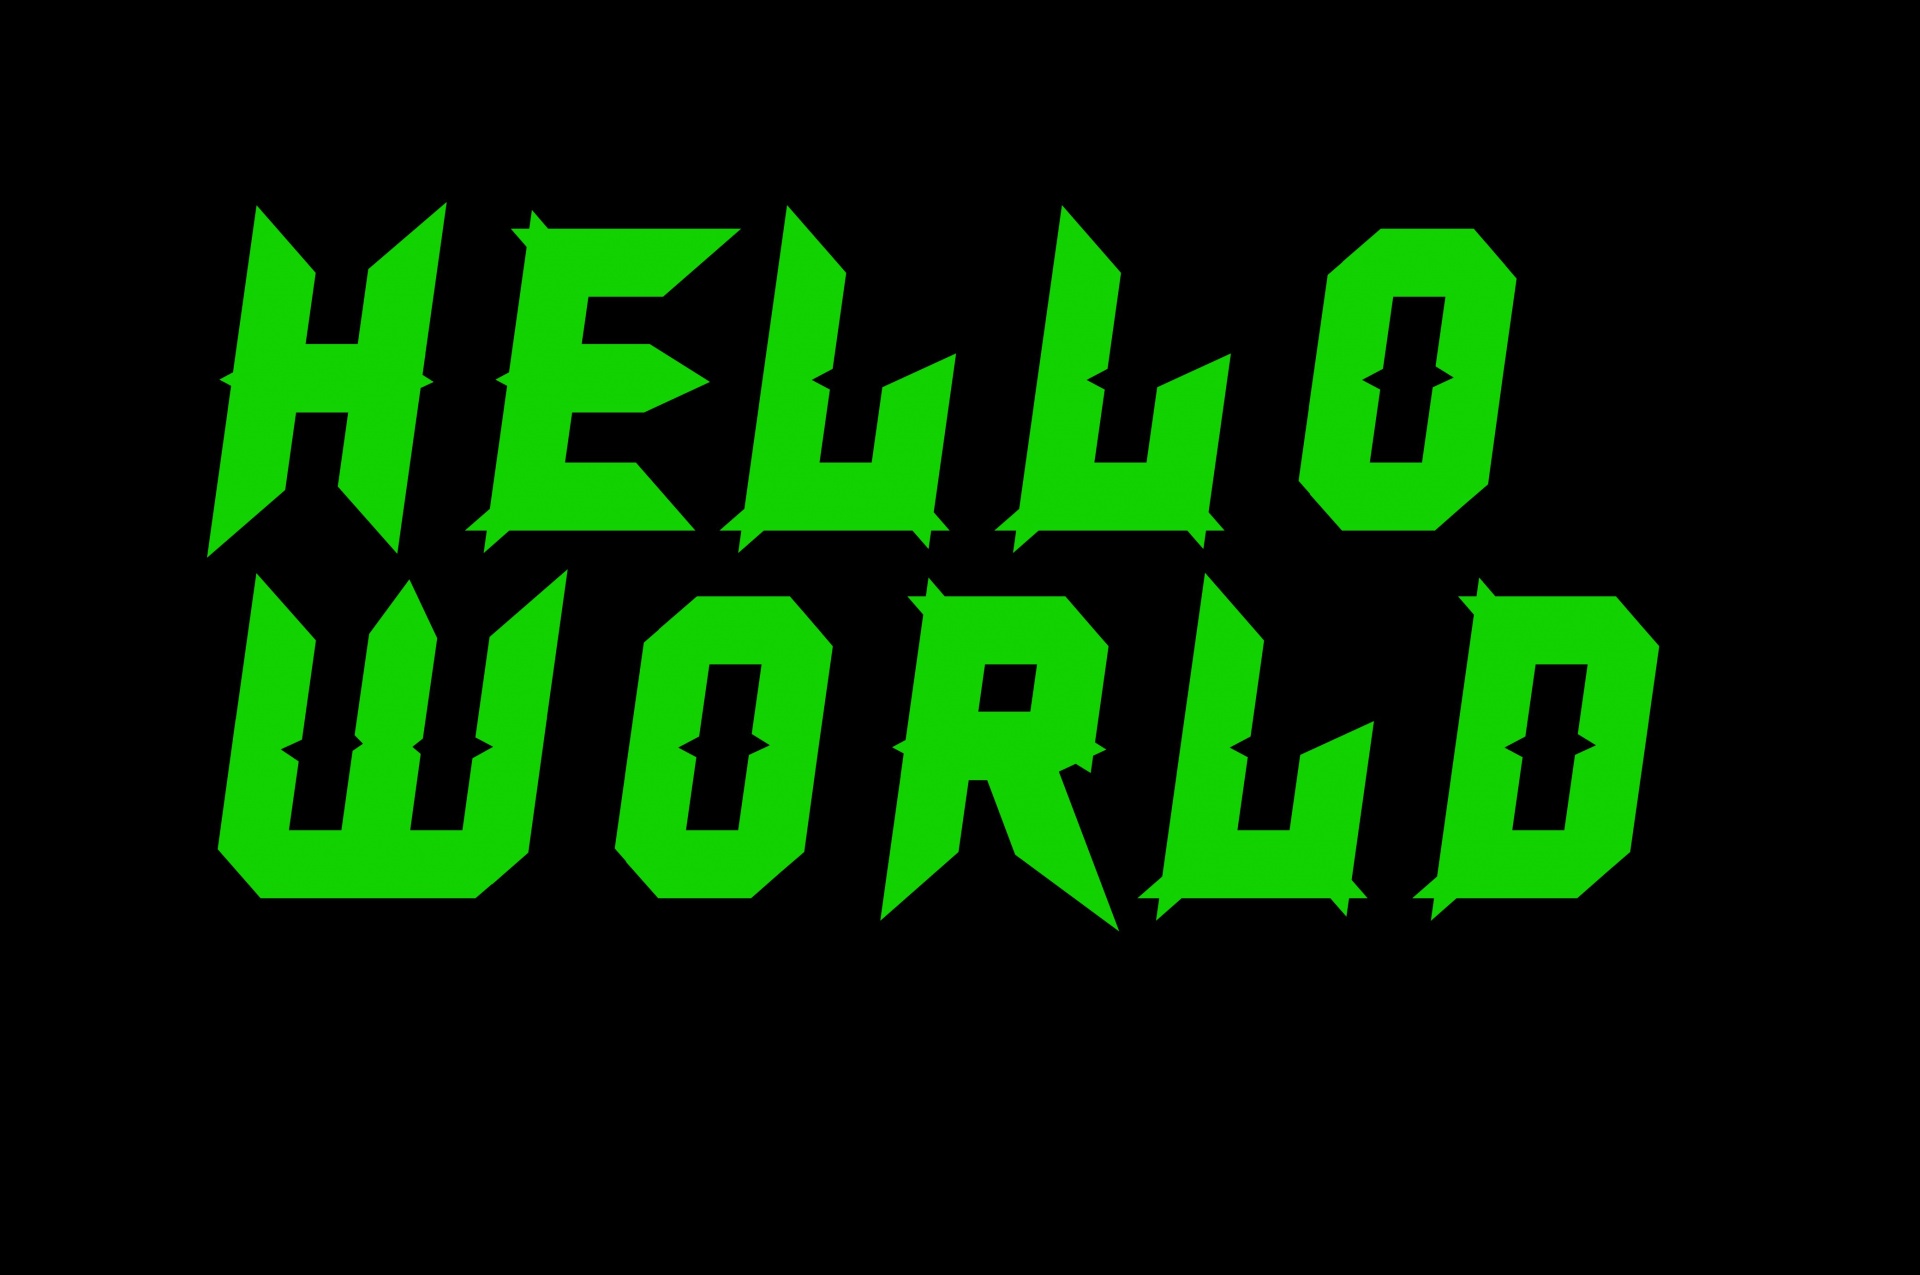 Hello World Digital Message